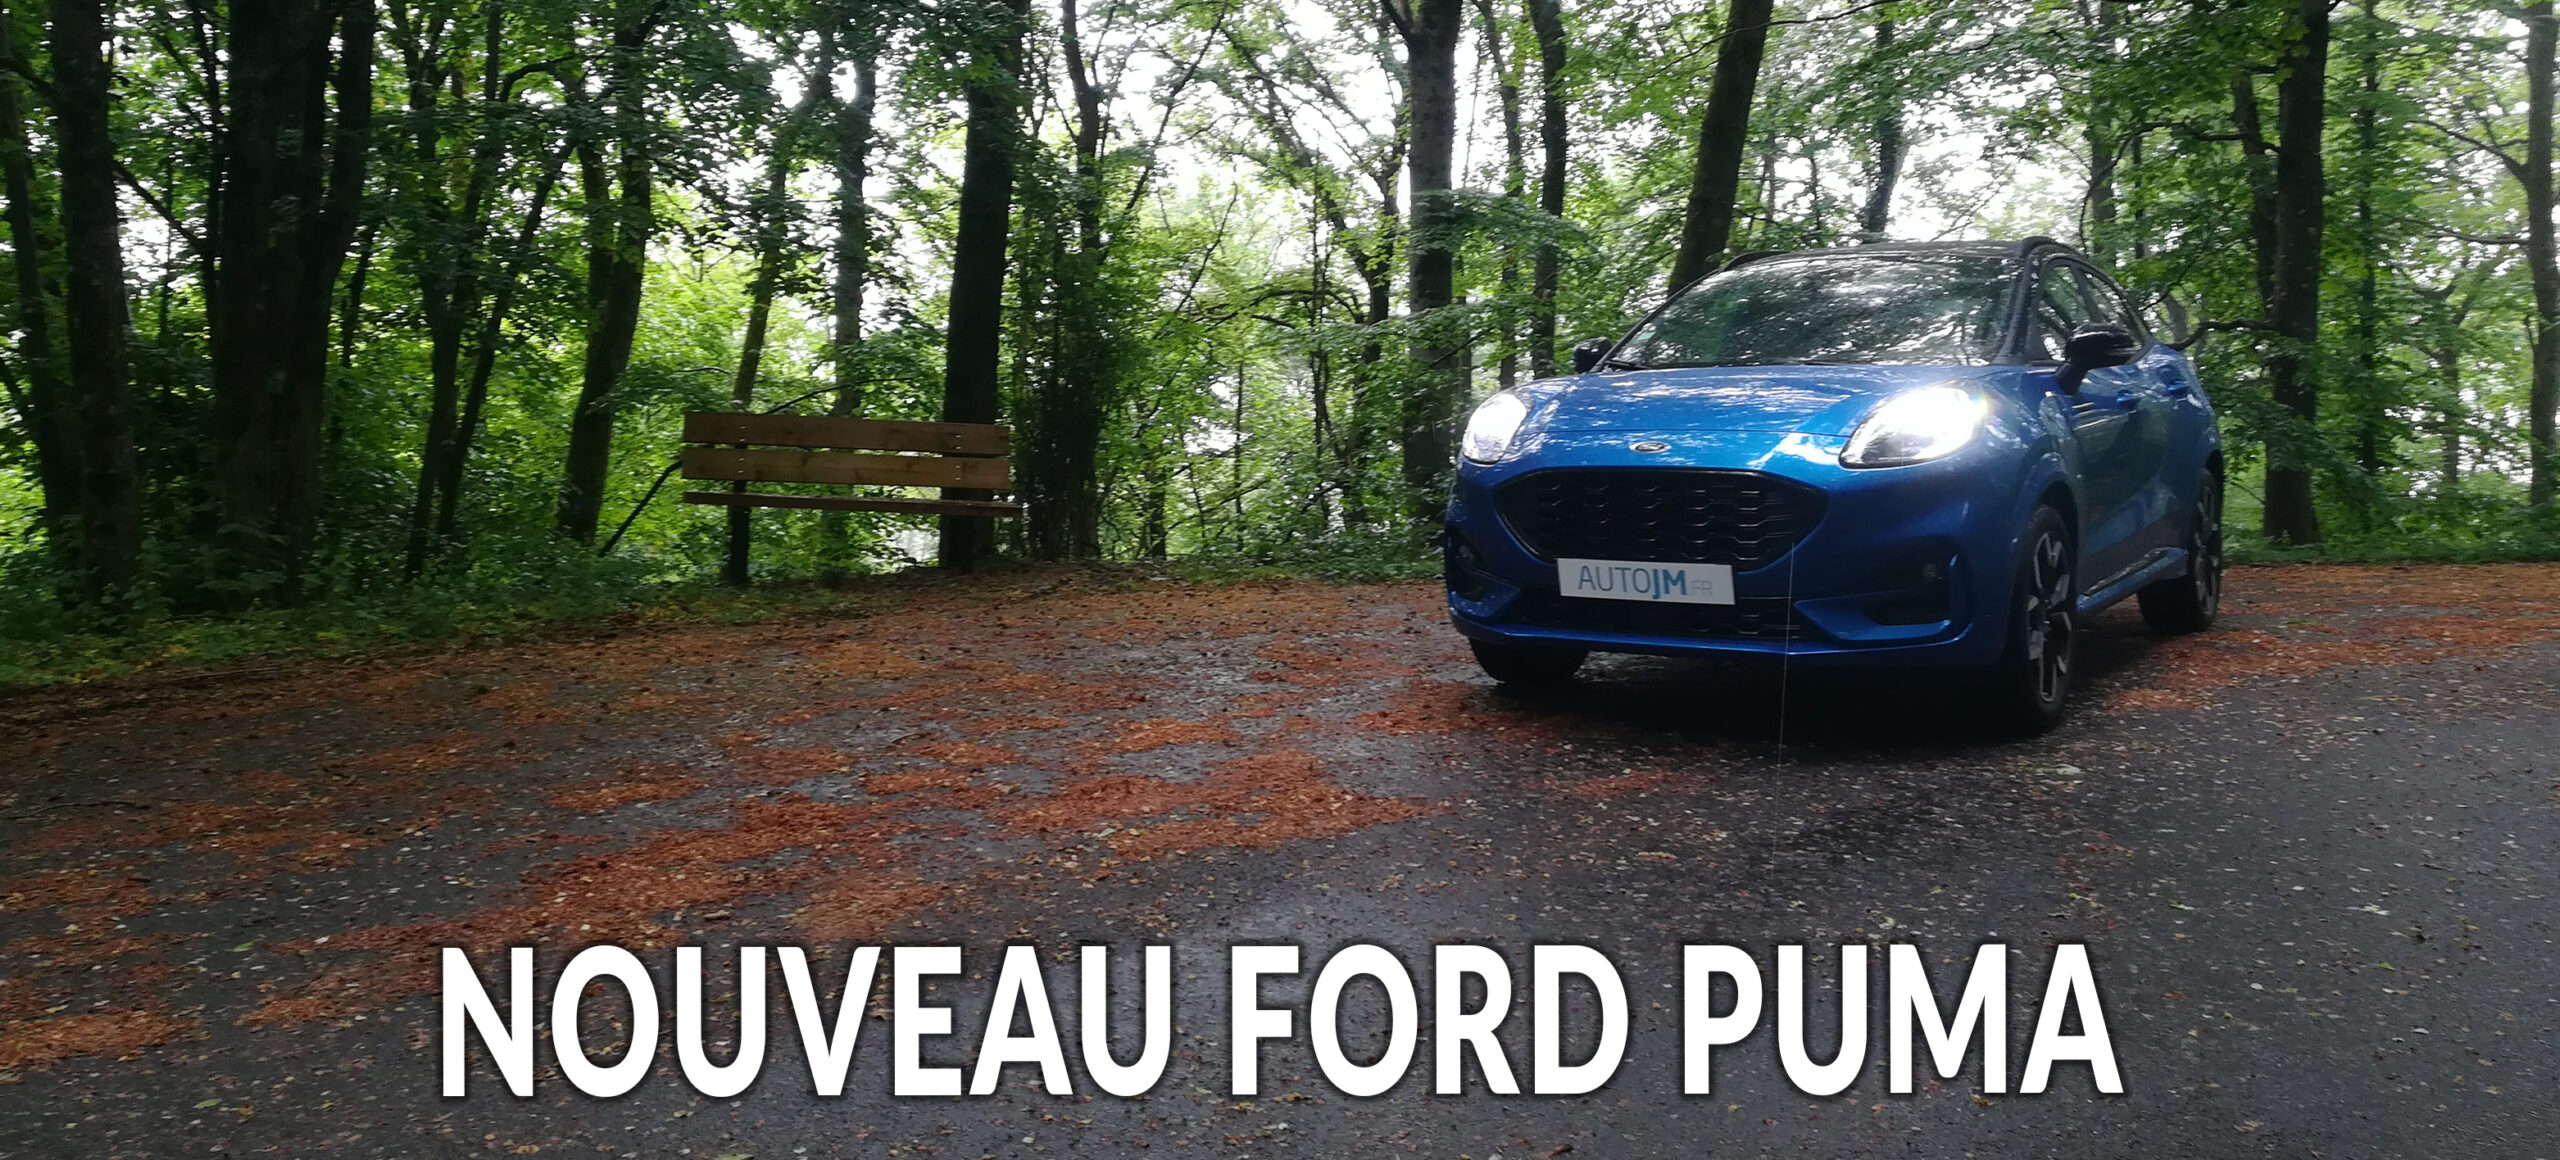 Nouveau Ford Puma